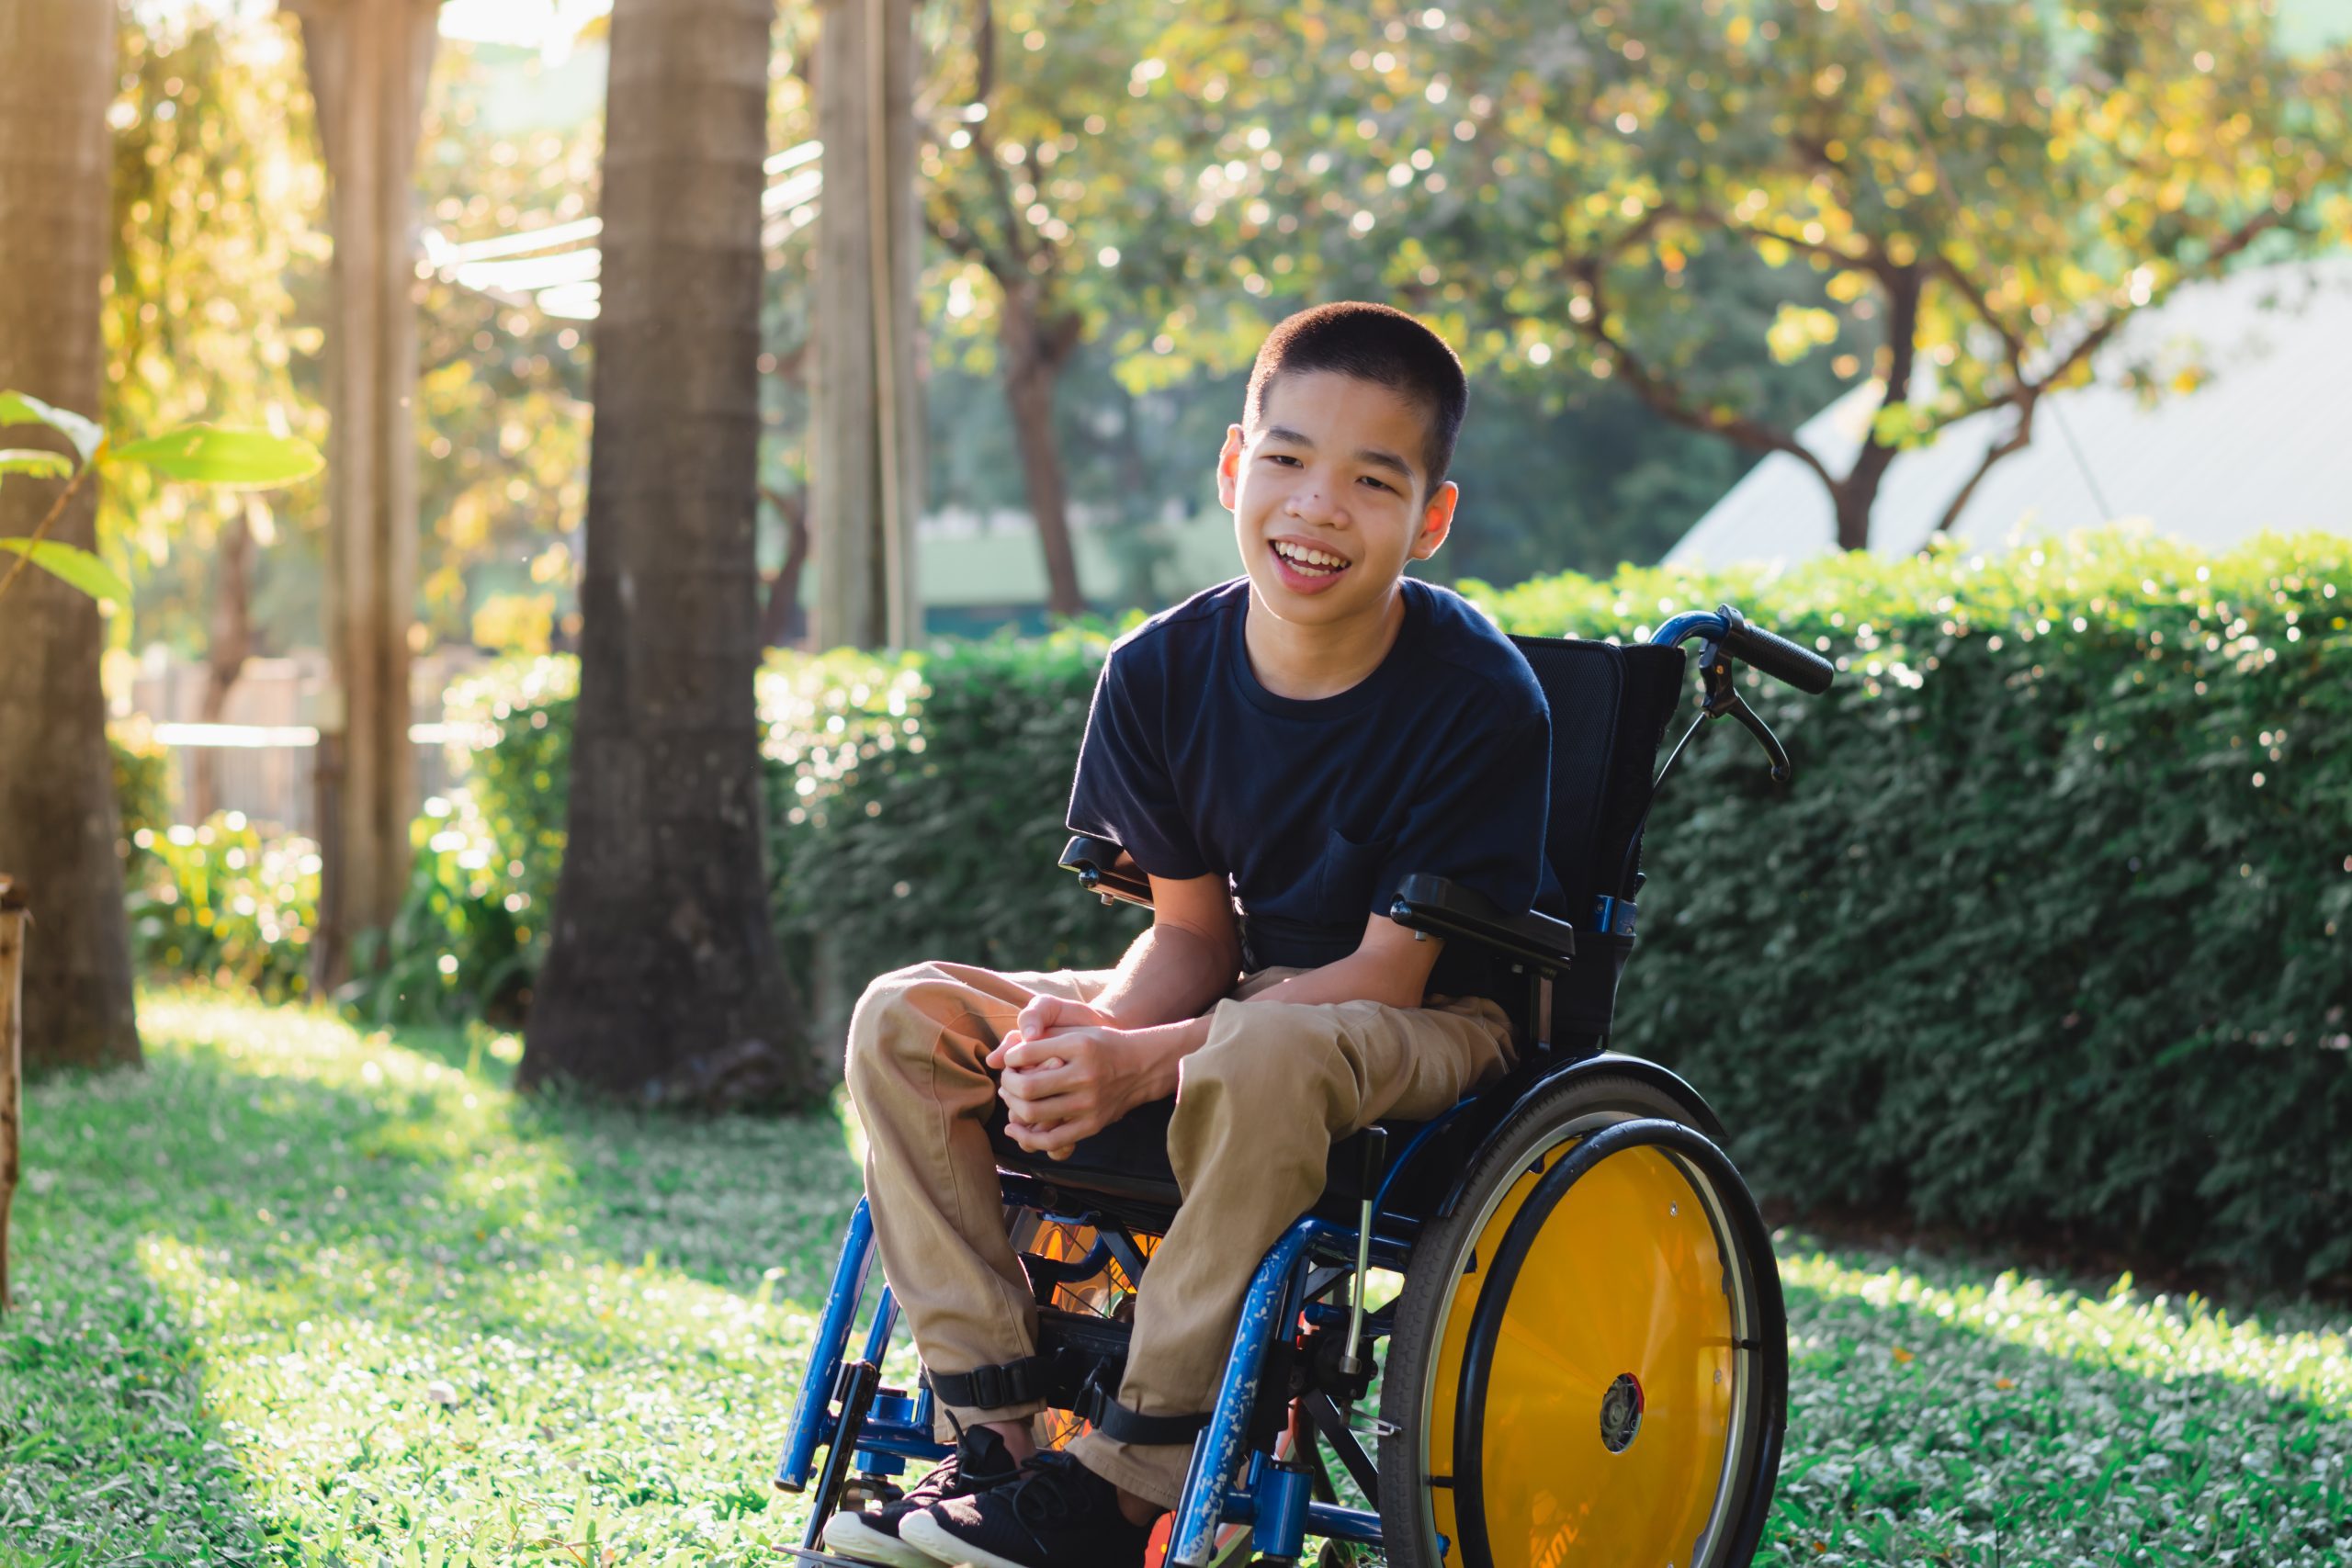 A boy in a wheelchair smiling in the garden